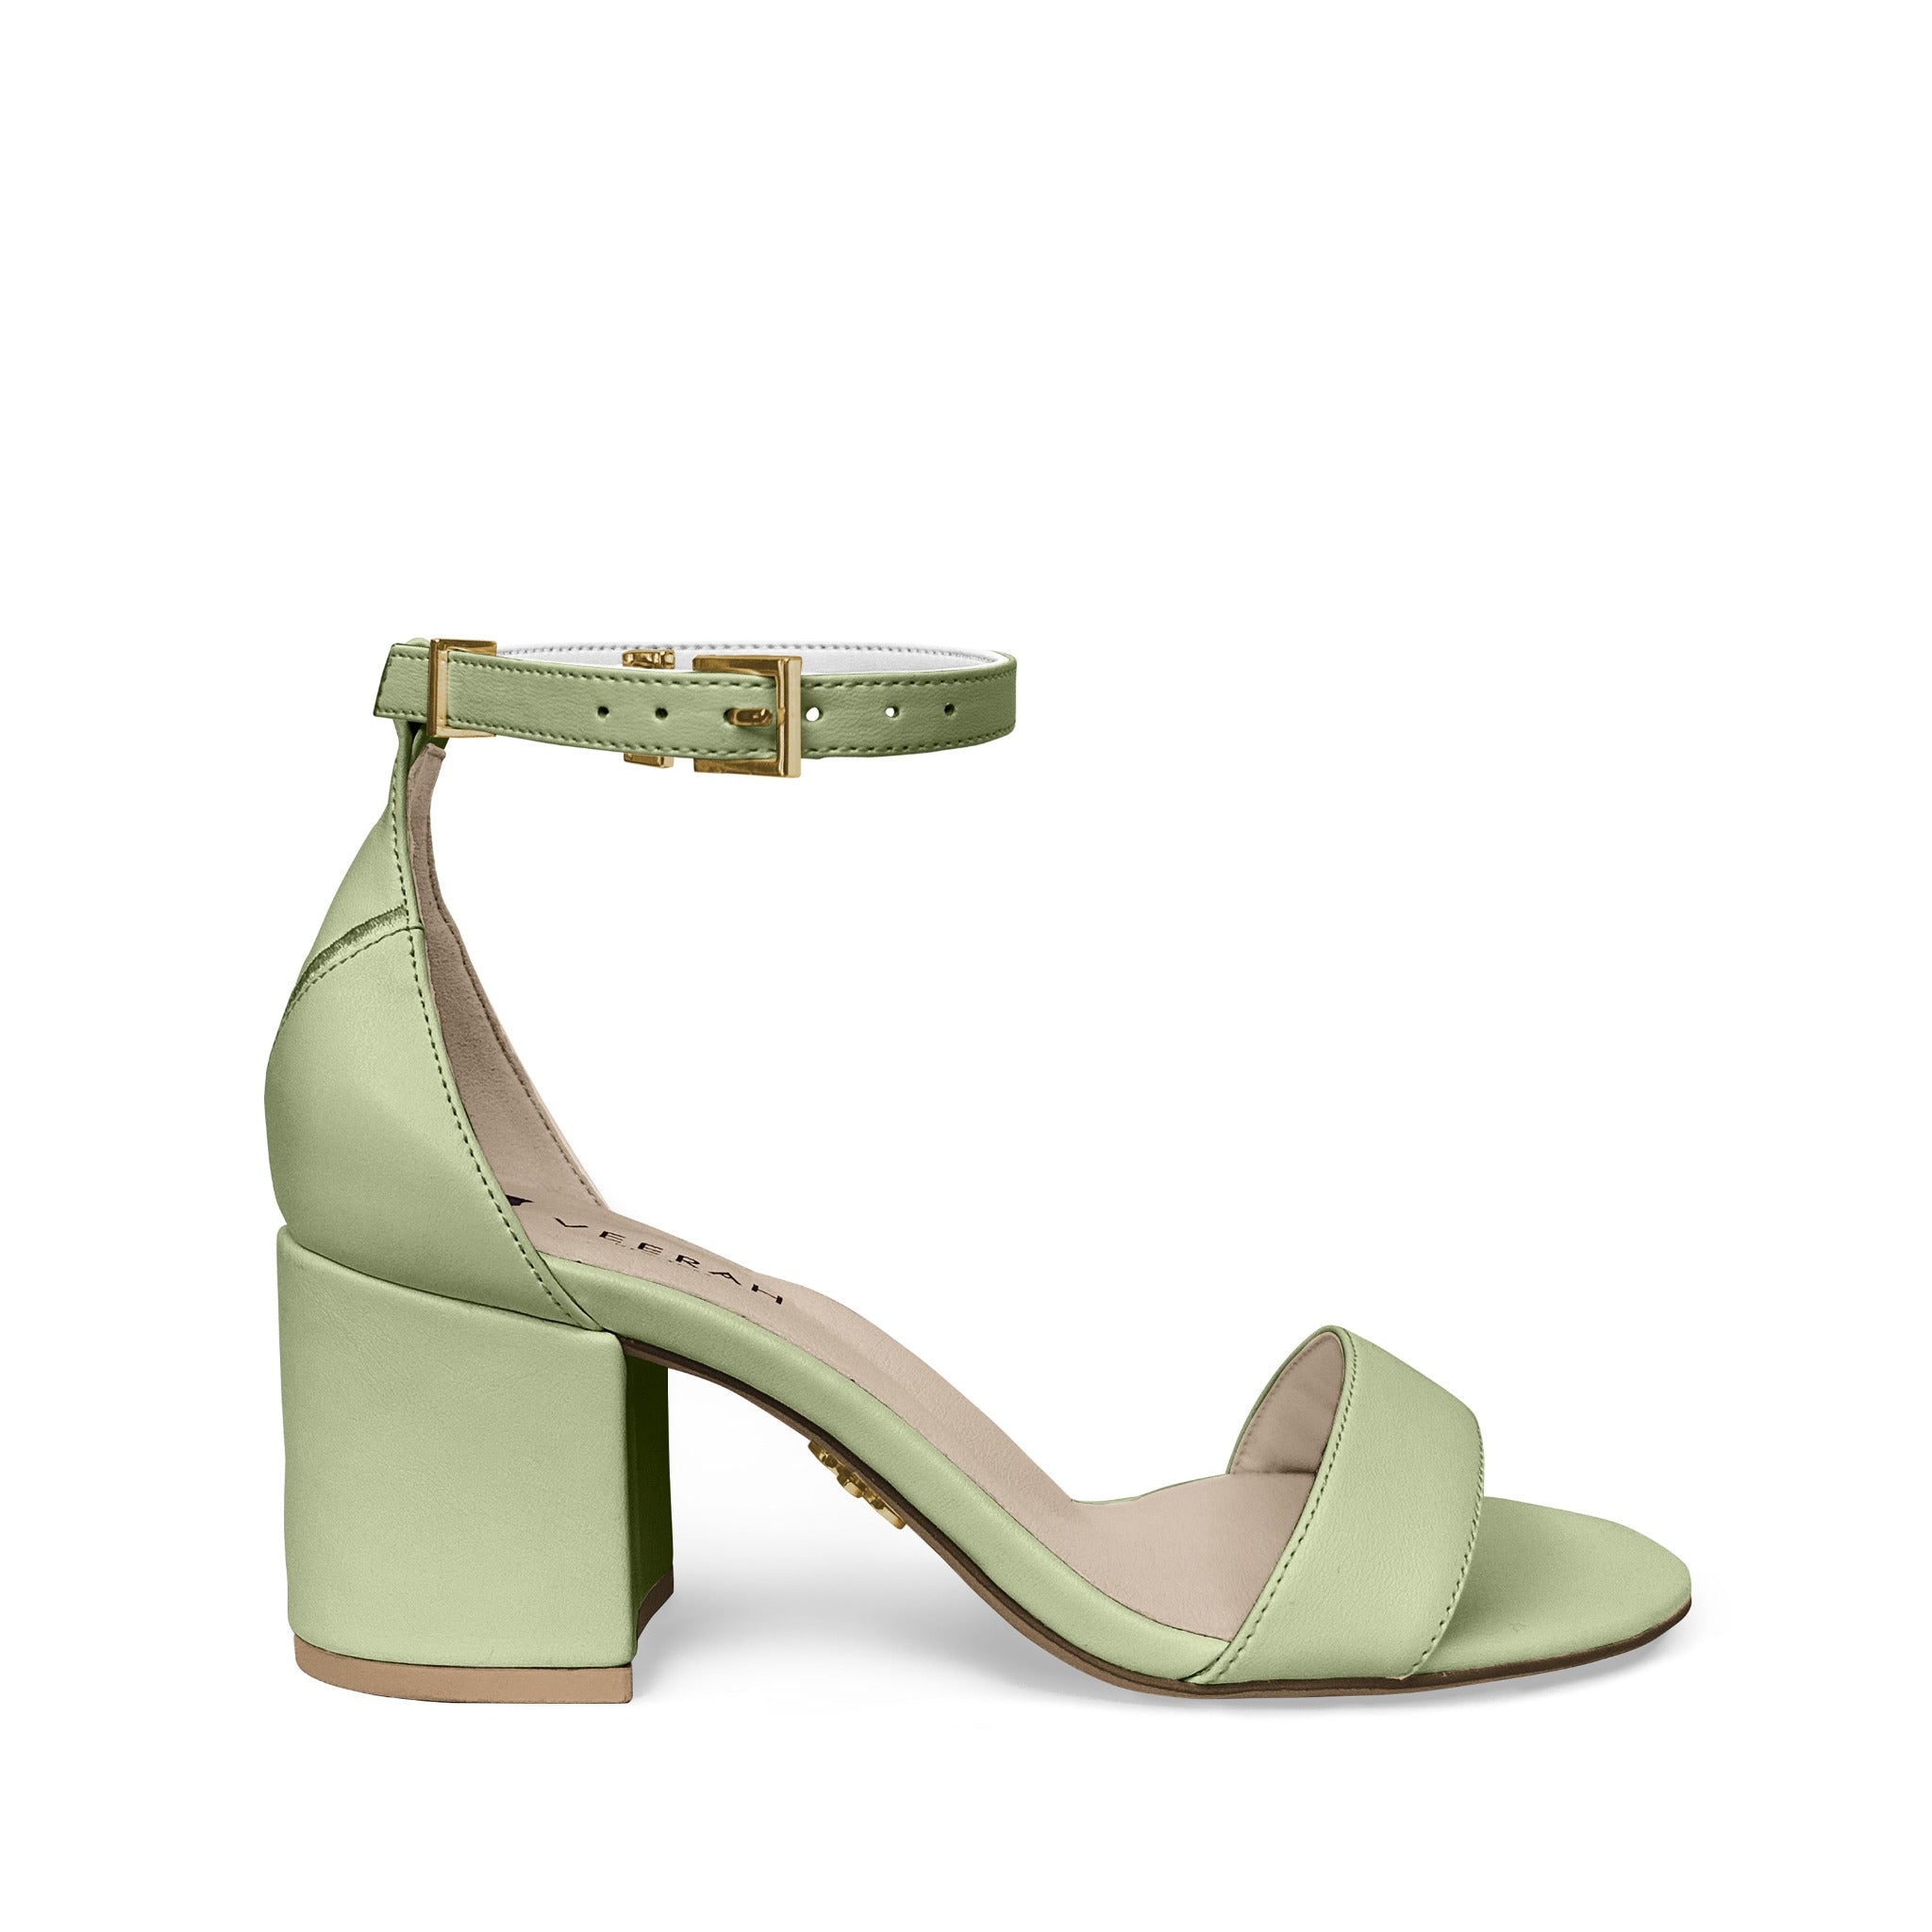 How is walking on block heels different from stilettos? - Quora